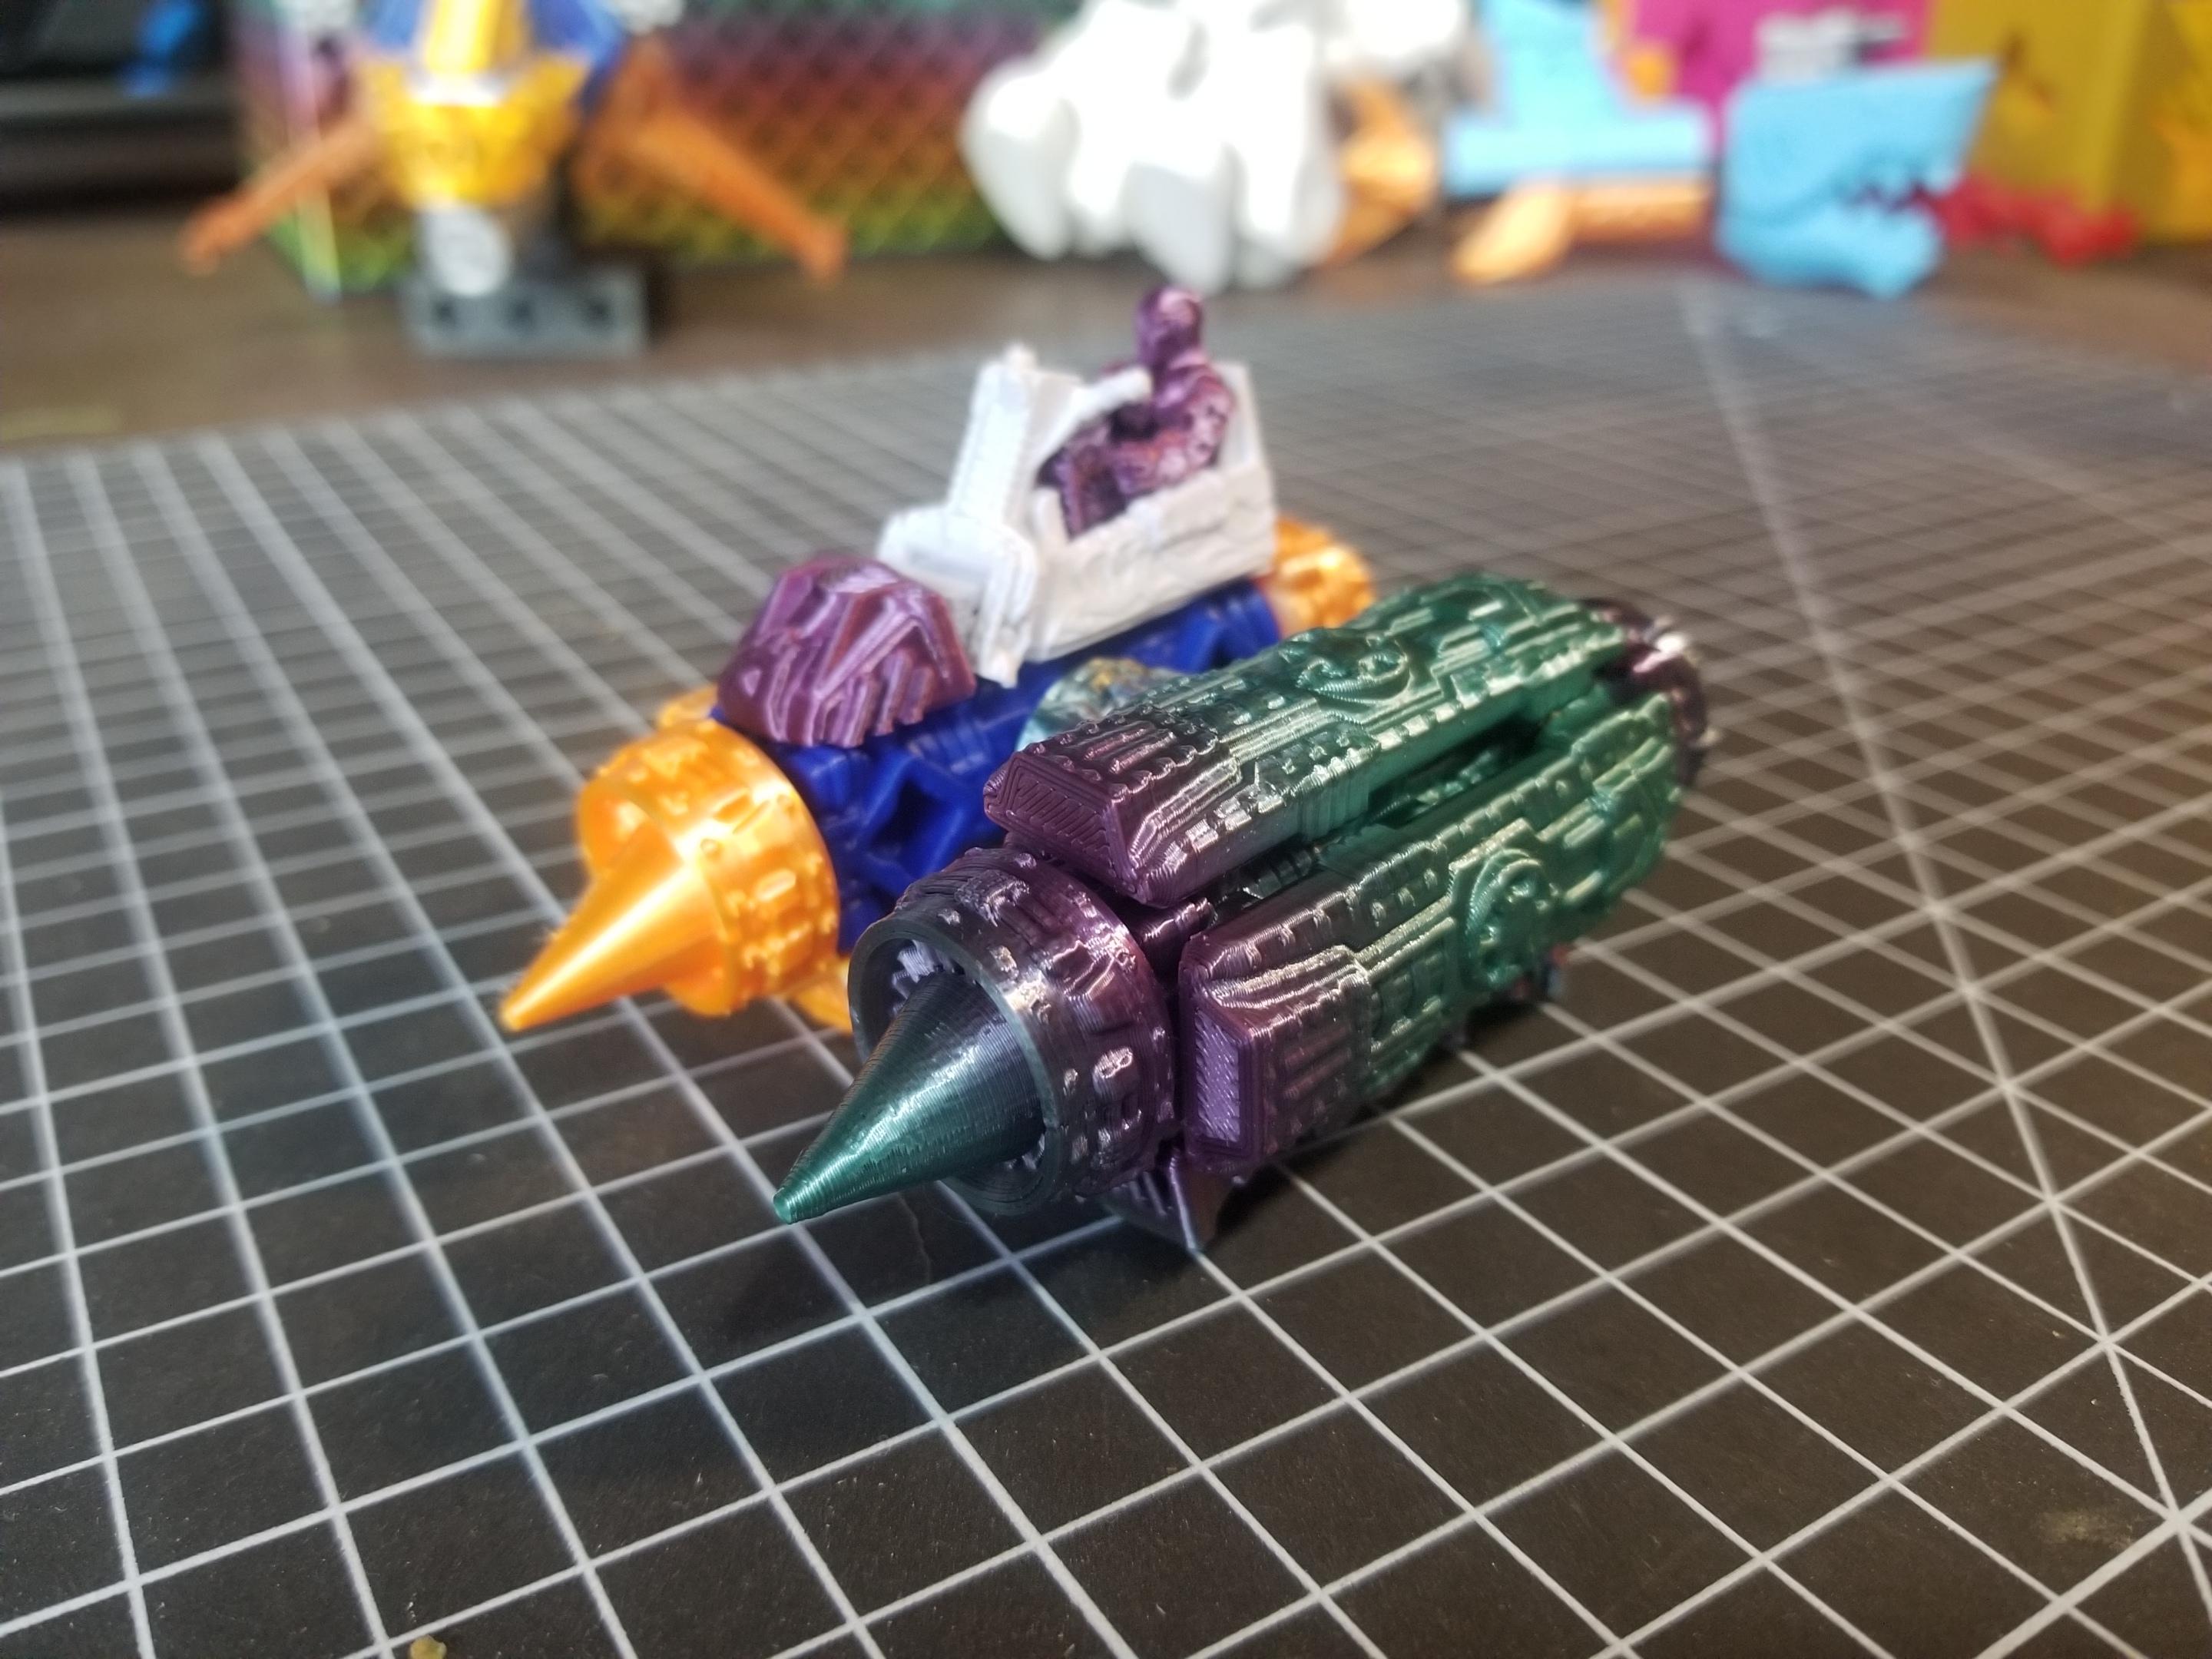 PrintABlok Jet Engine Rider Construction Toy 3d model